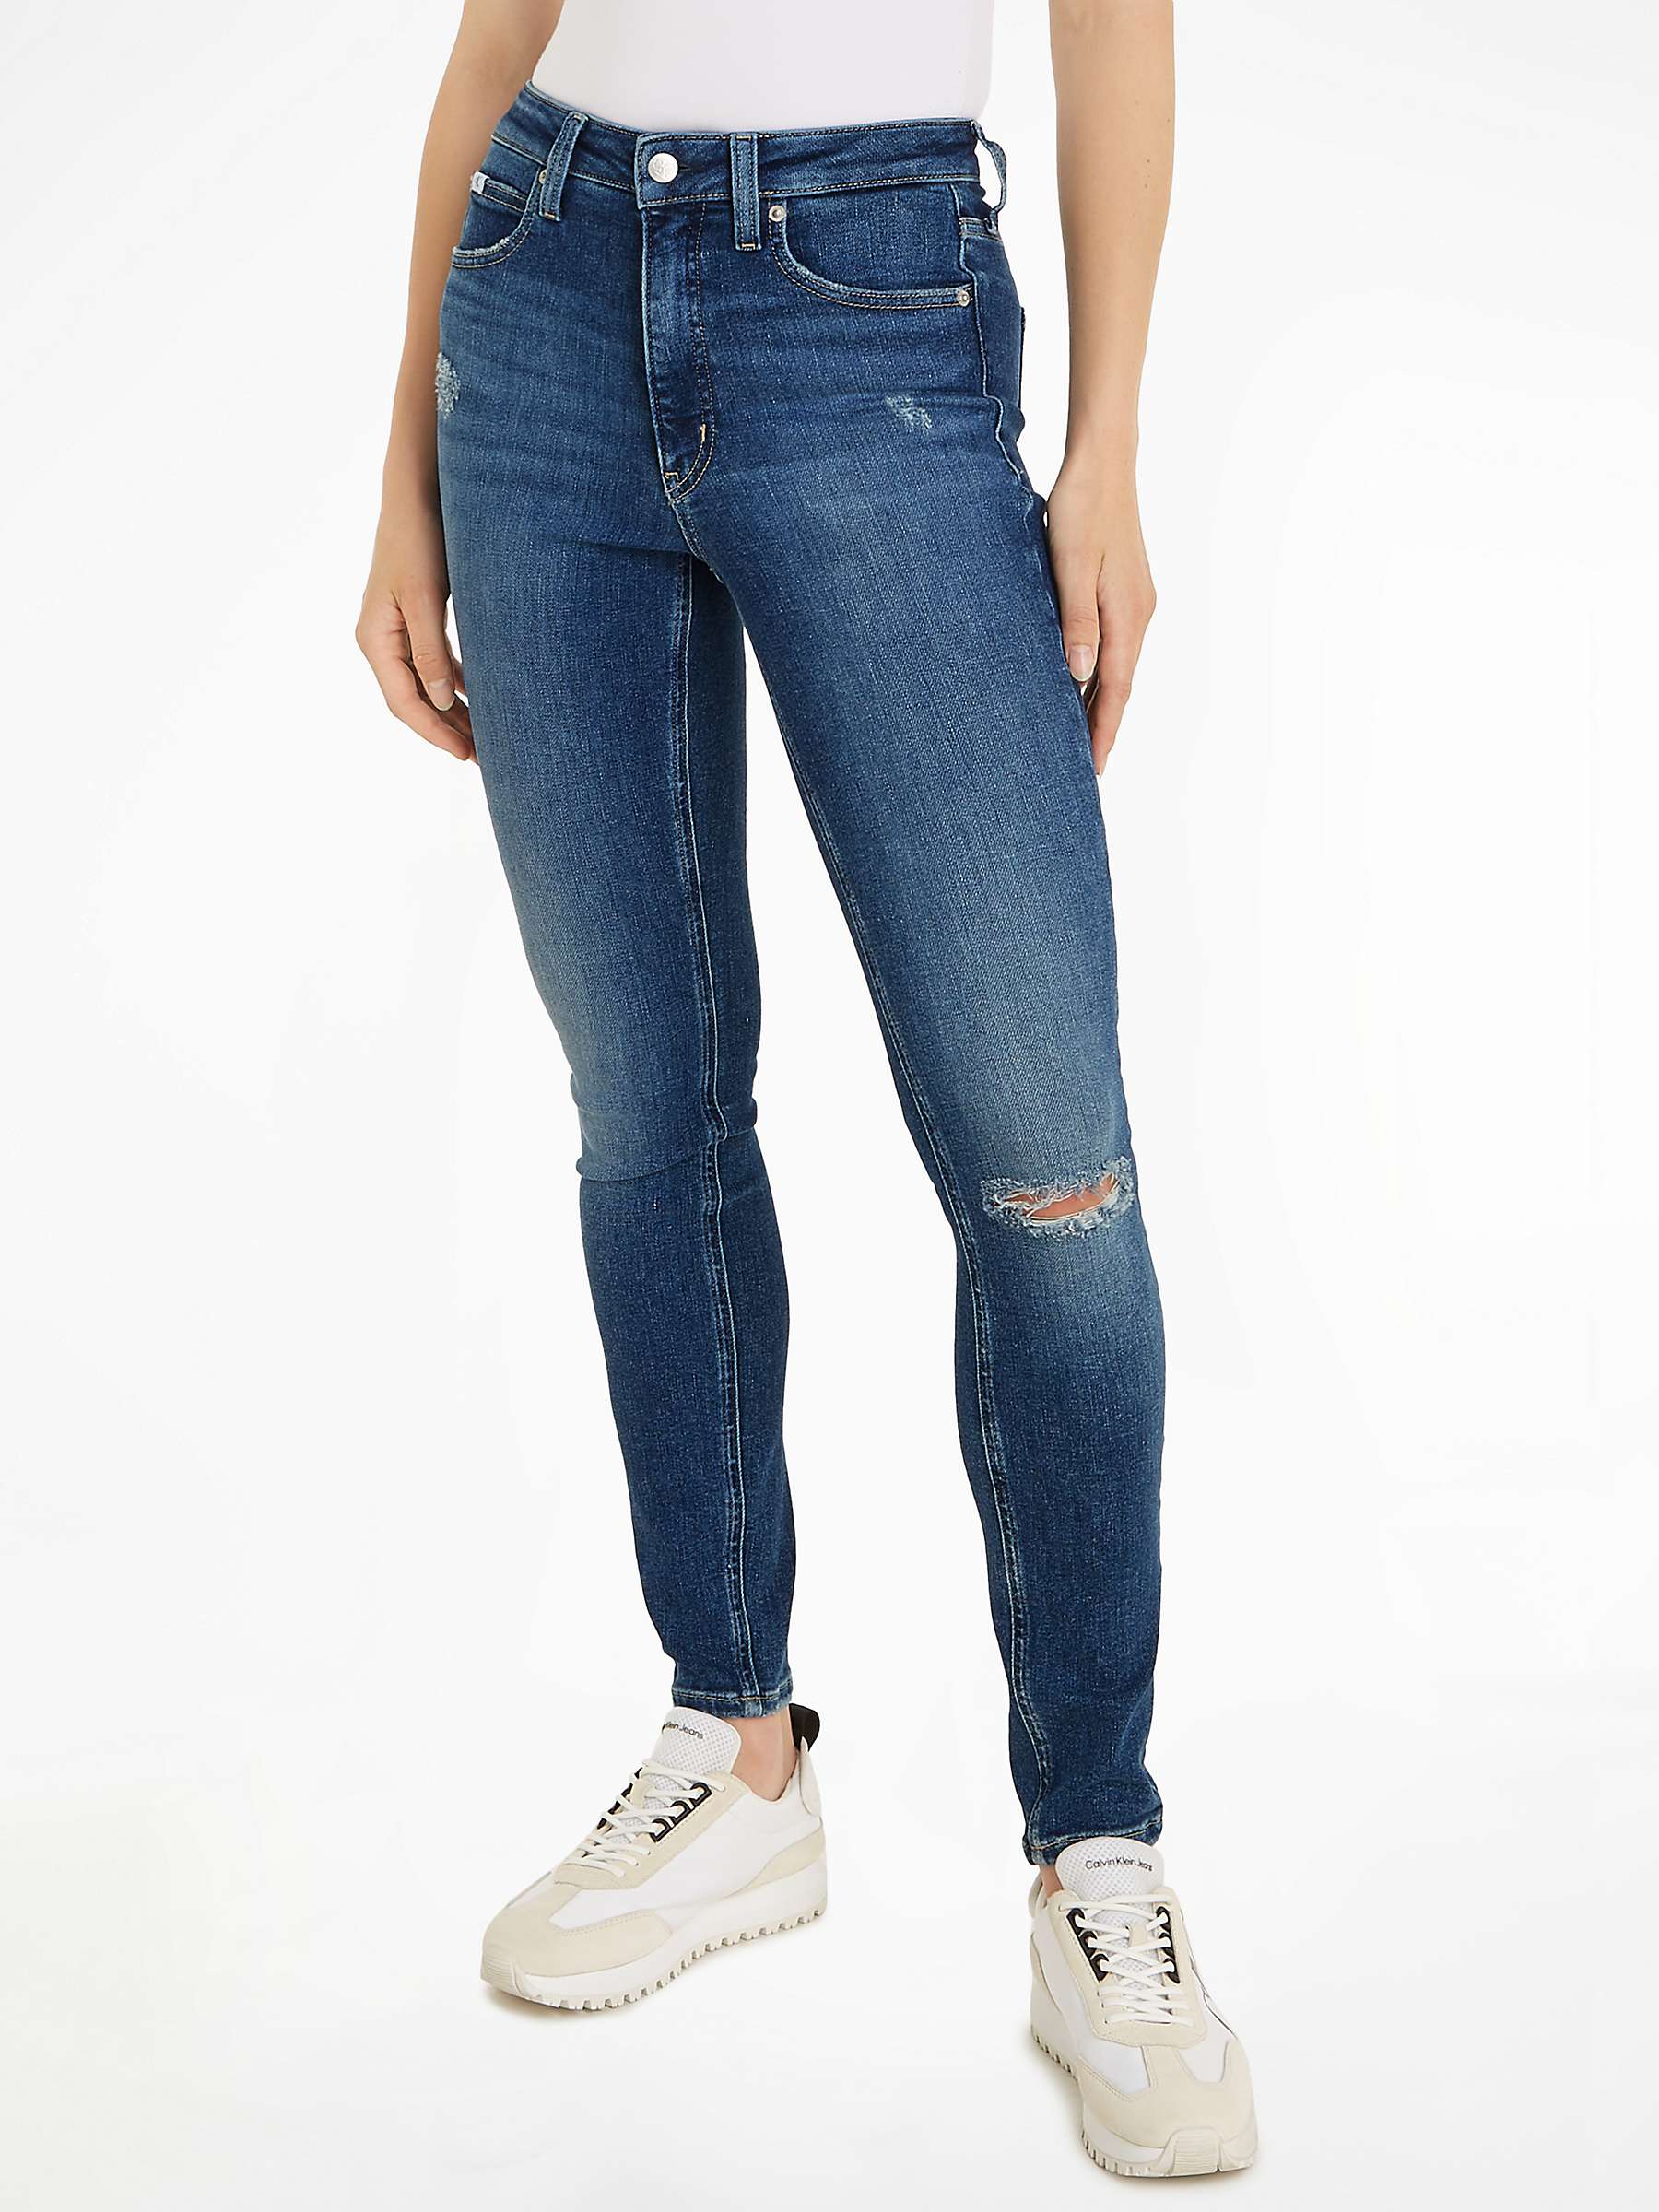 Buy Calvin Klein Cotton Blend Skinny Jeans, Denim Dark Online at johnlewis.com